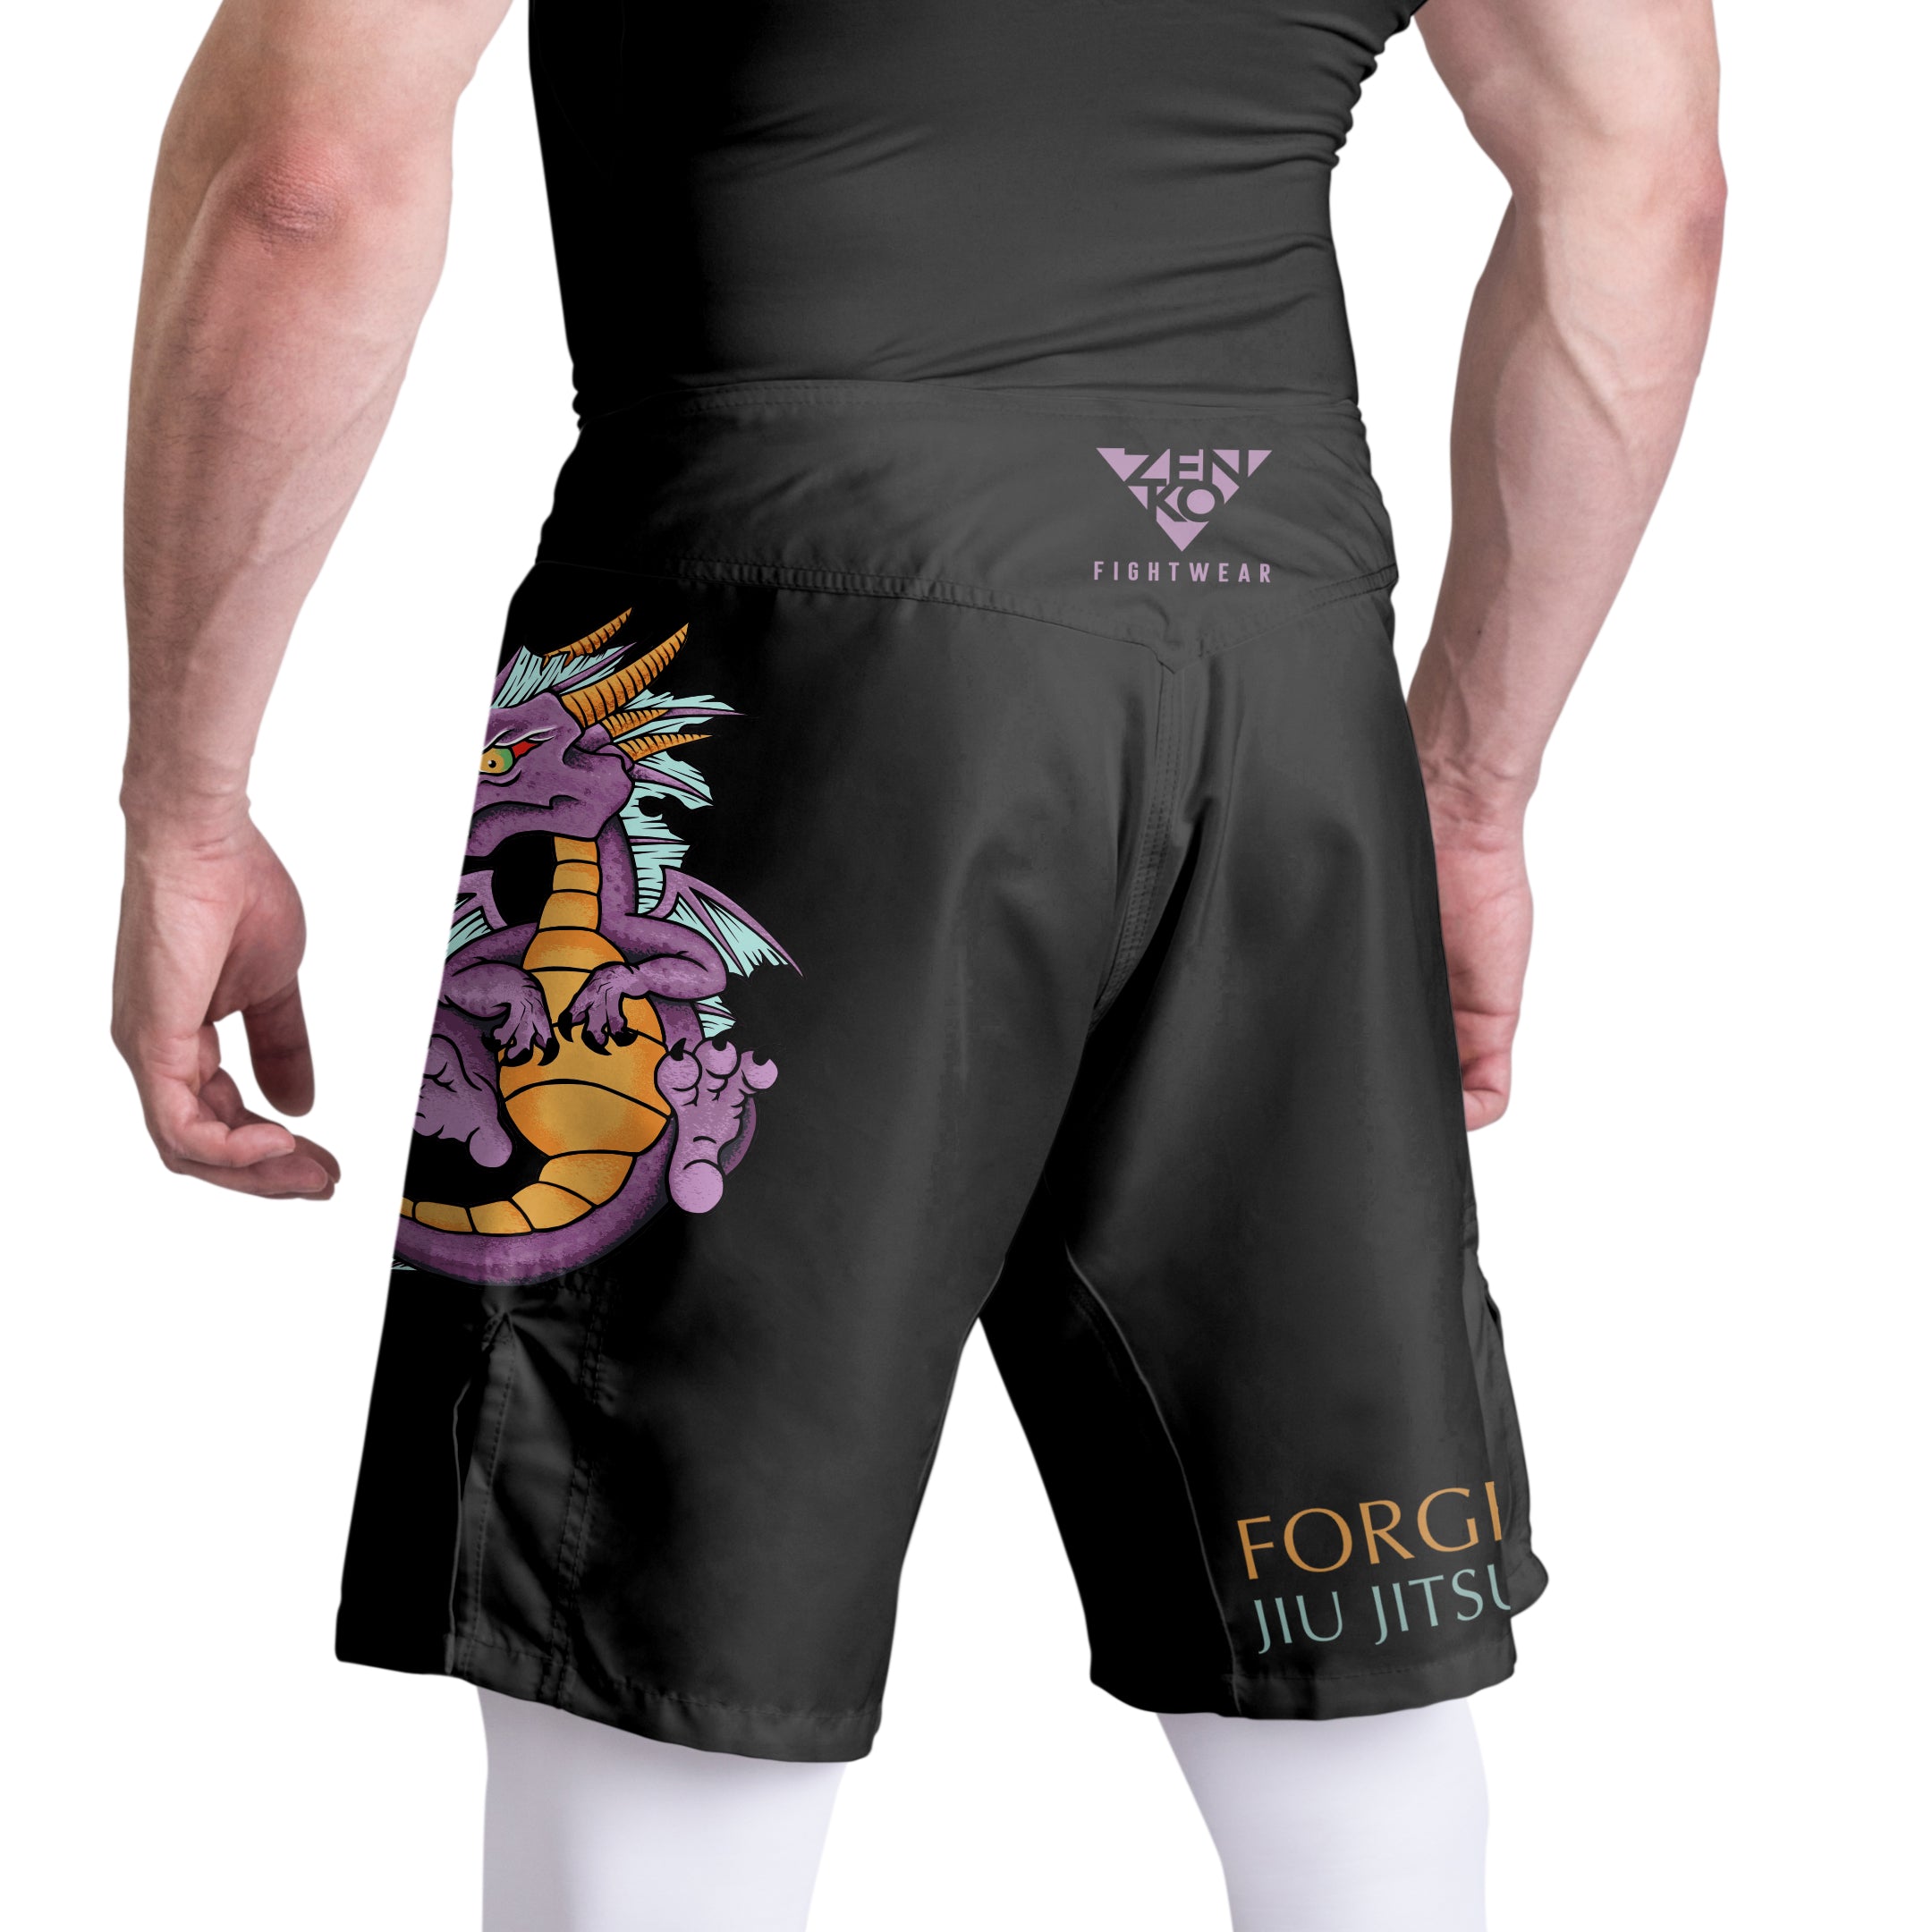 Forge Jiu Jitsu Baby Dragon Fight Shorts - Zenko Fightwear